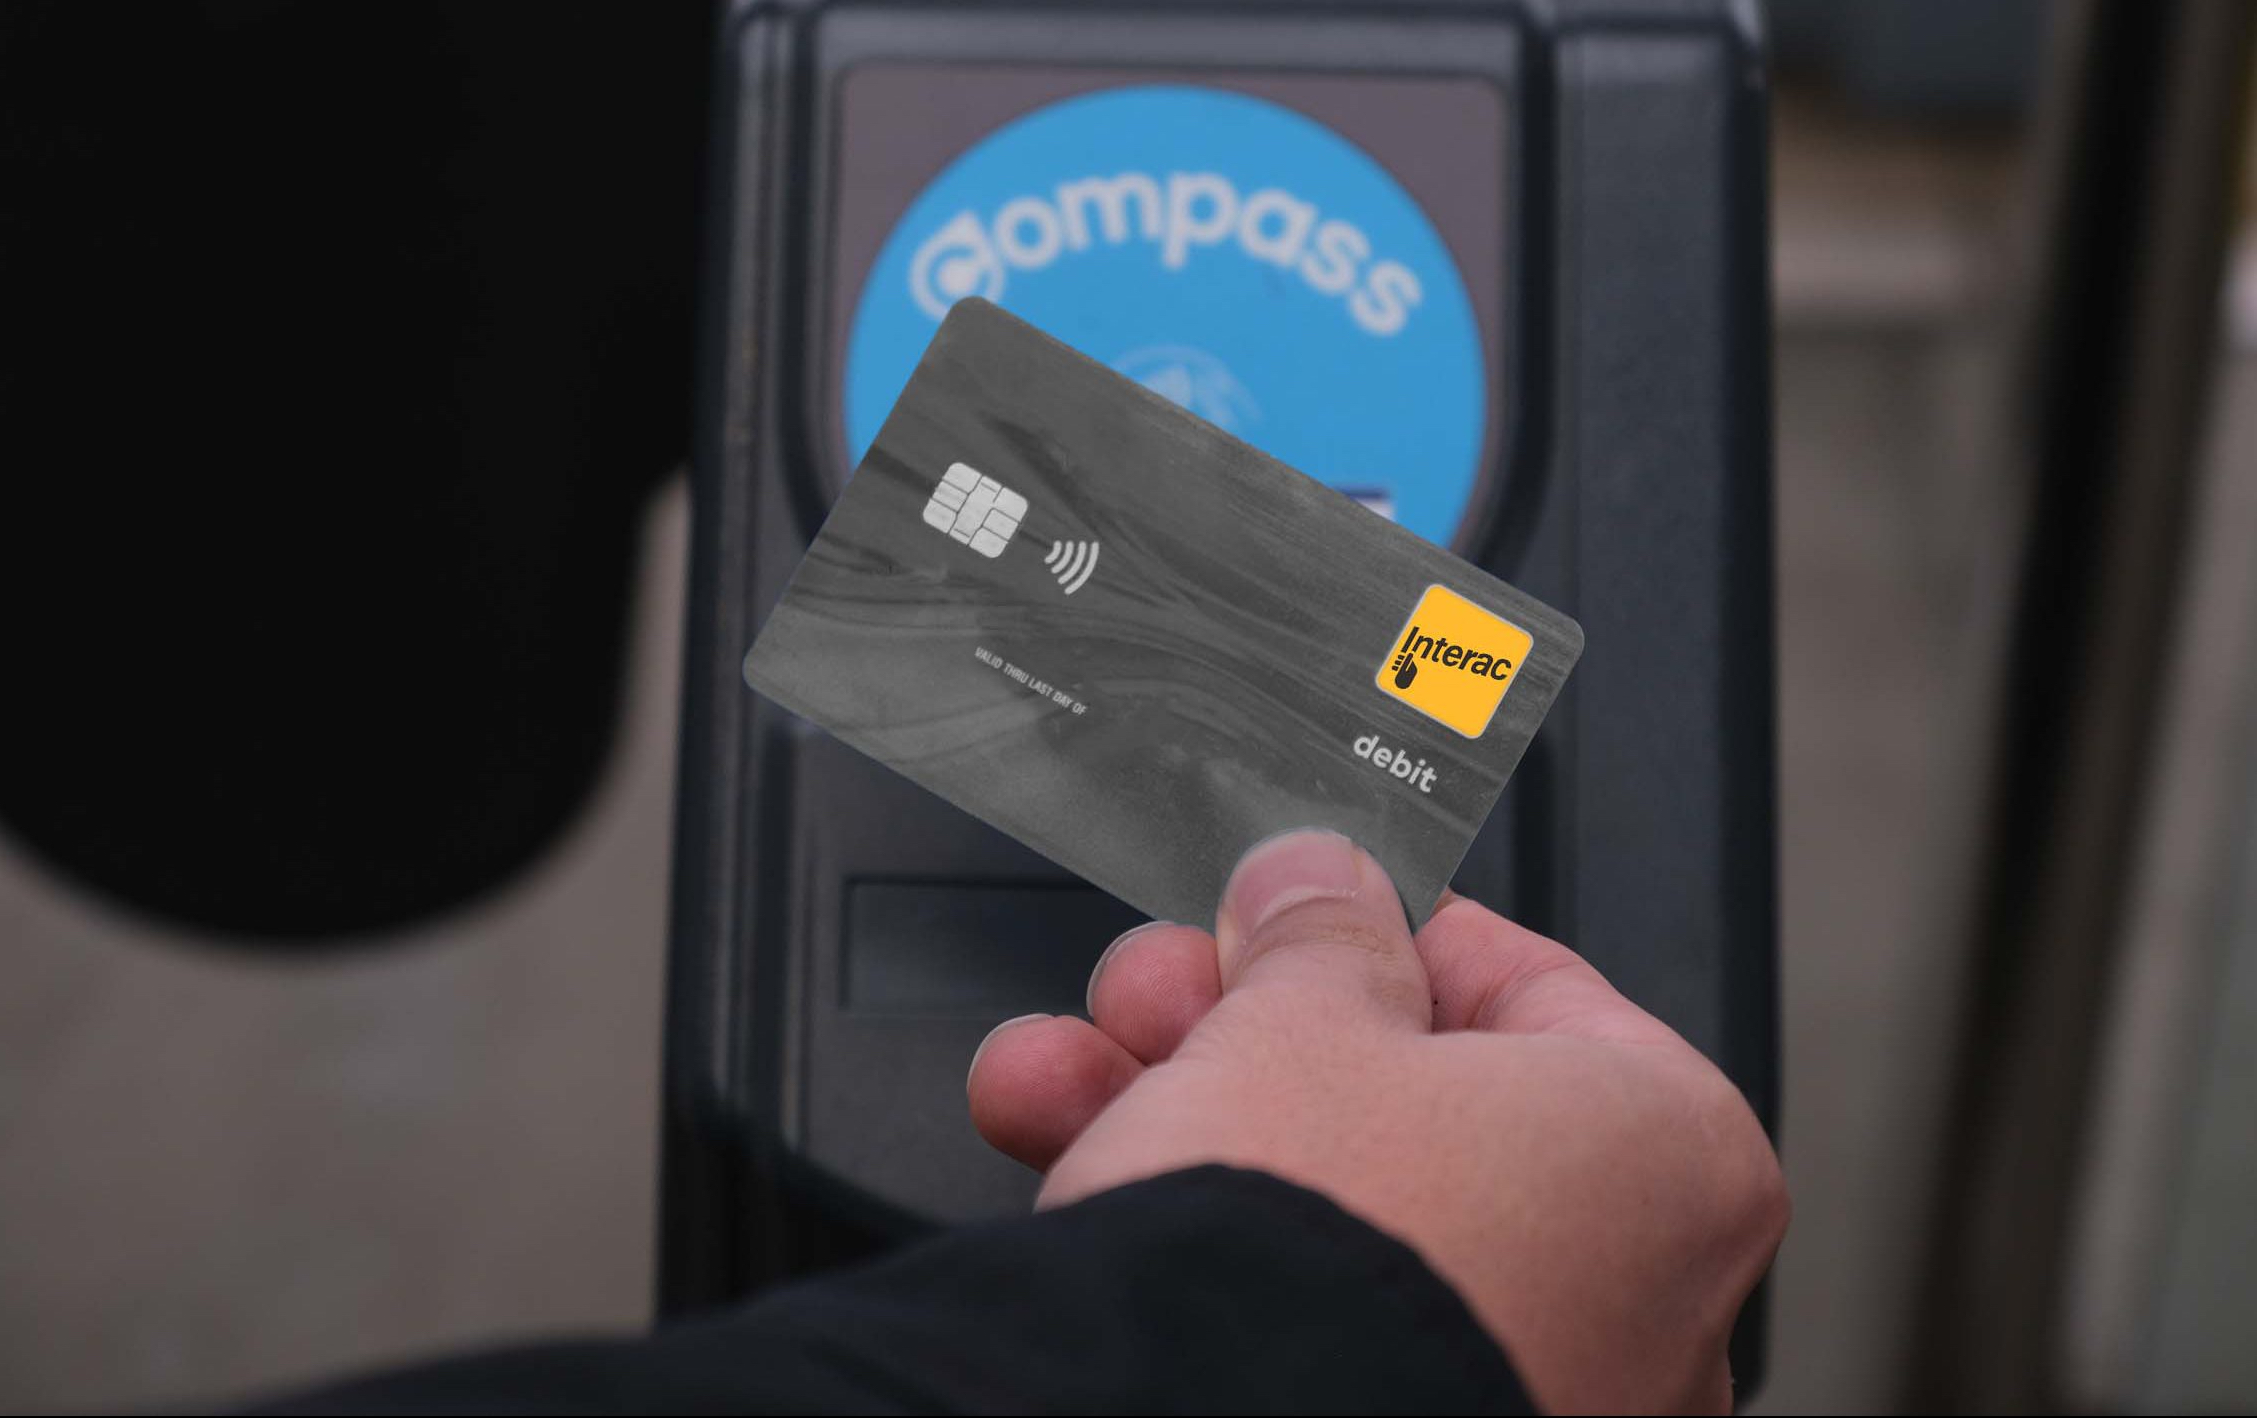 Interac card at Compass terminal